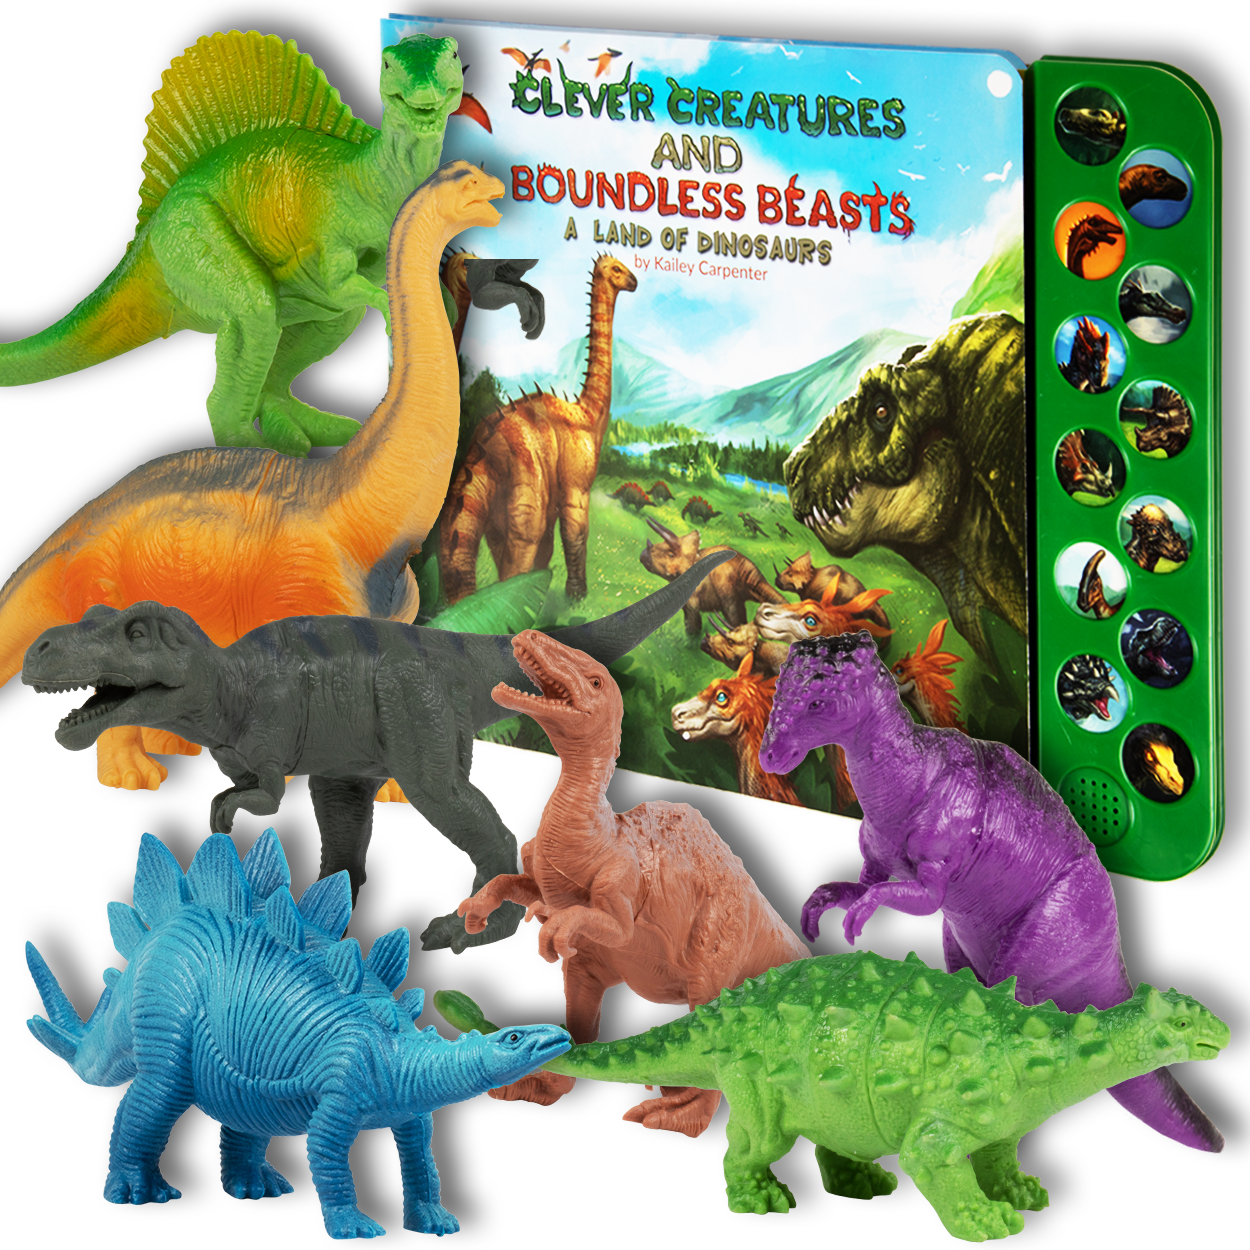 Children Dinosaur Figures Medium Playset Plastic Kids Game School Gift Neat-Oh 